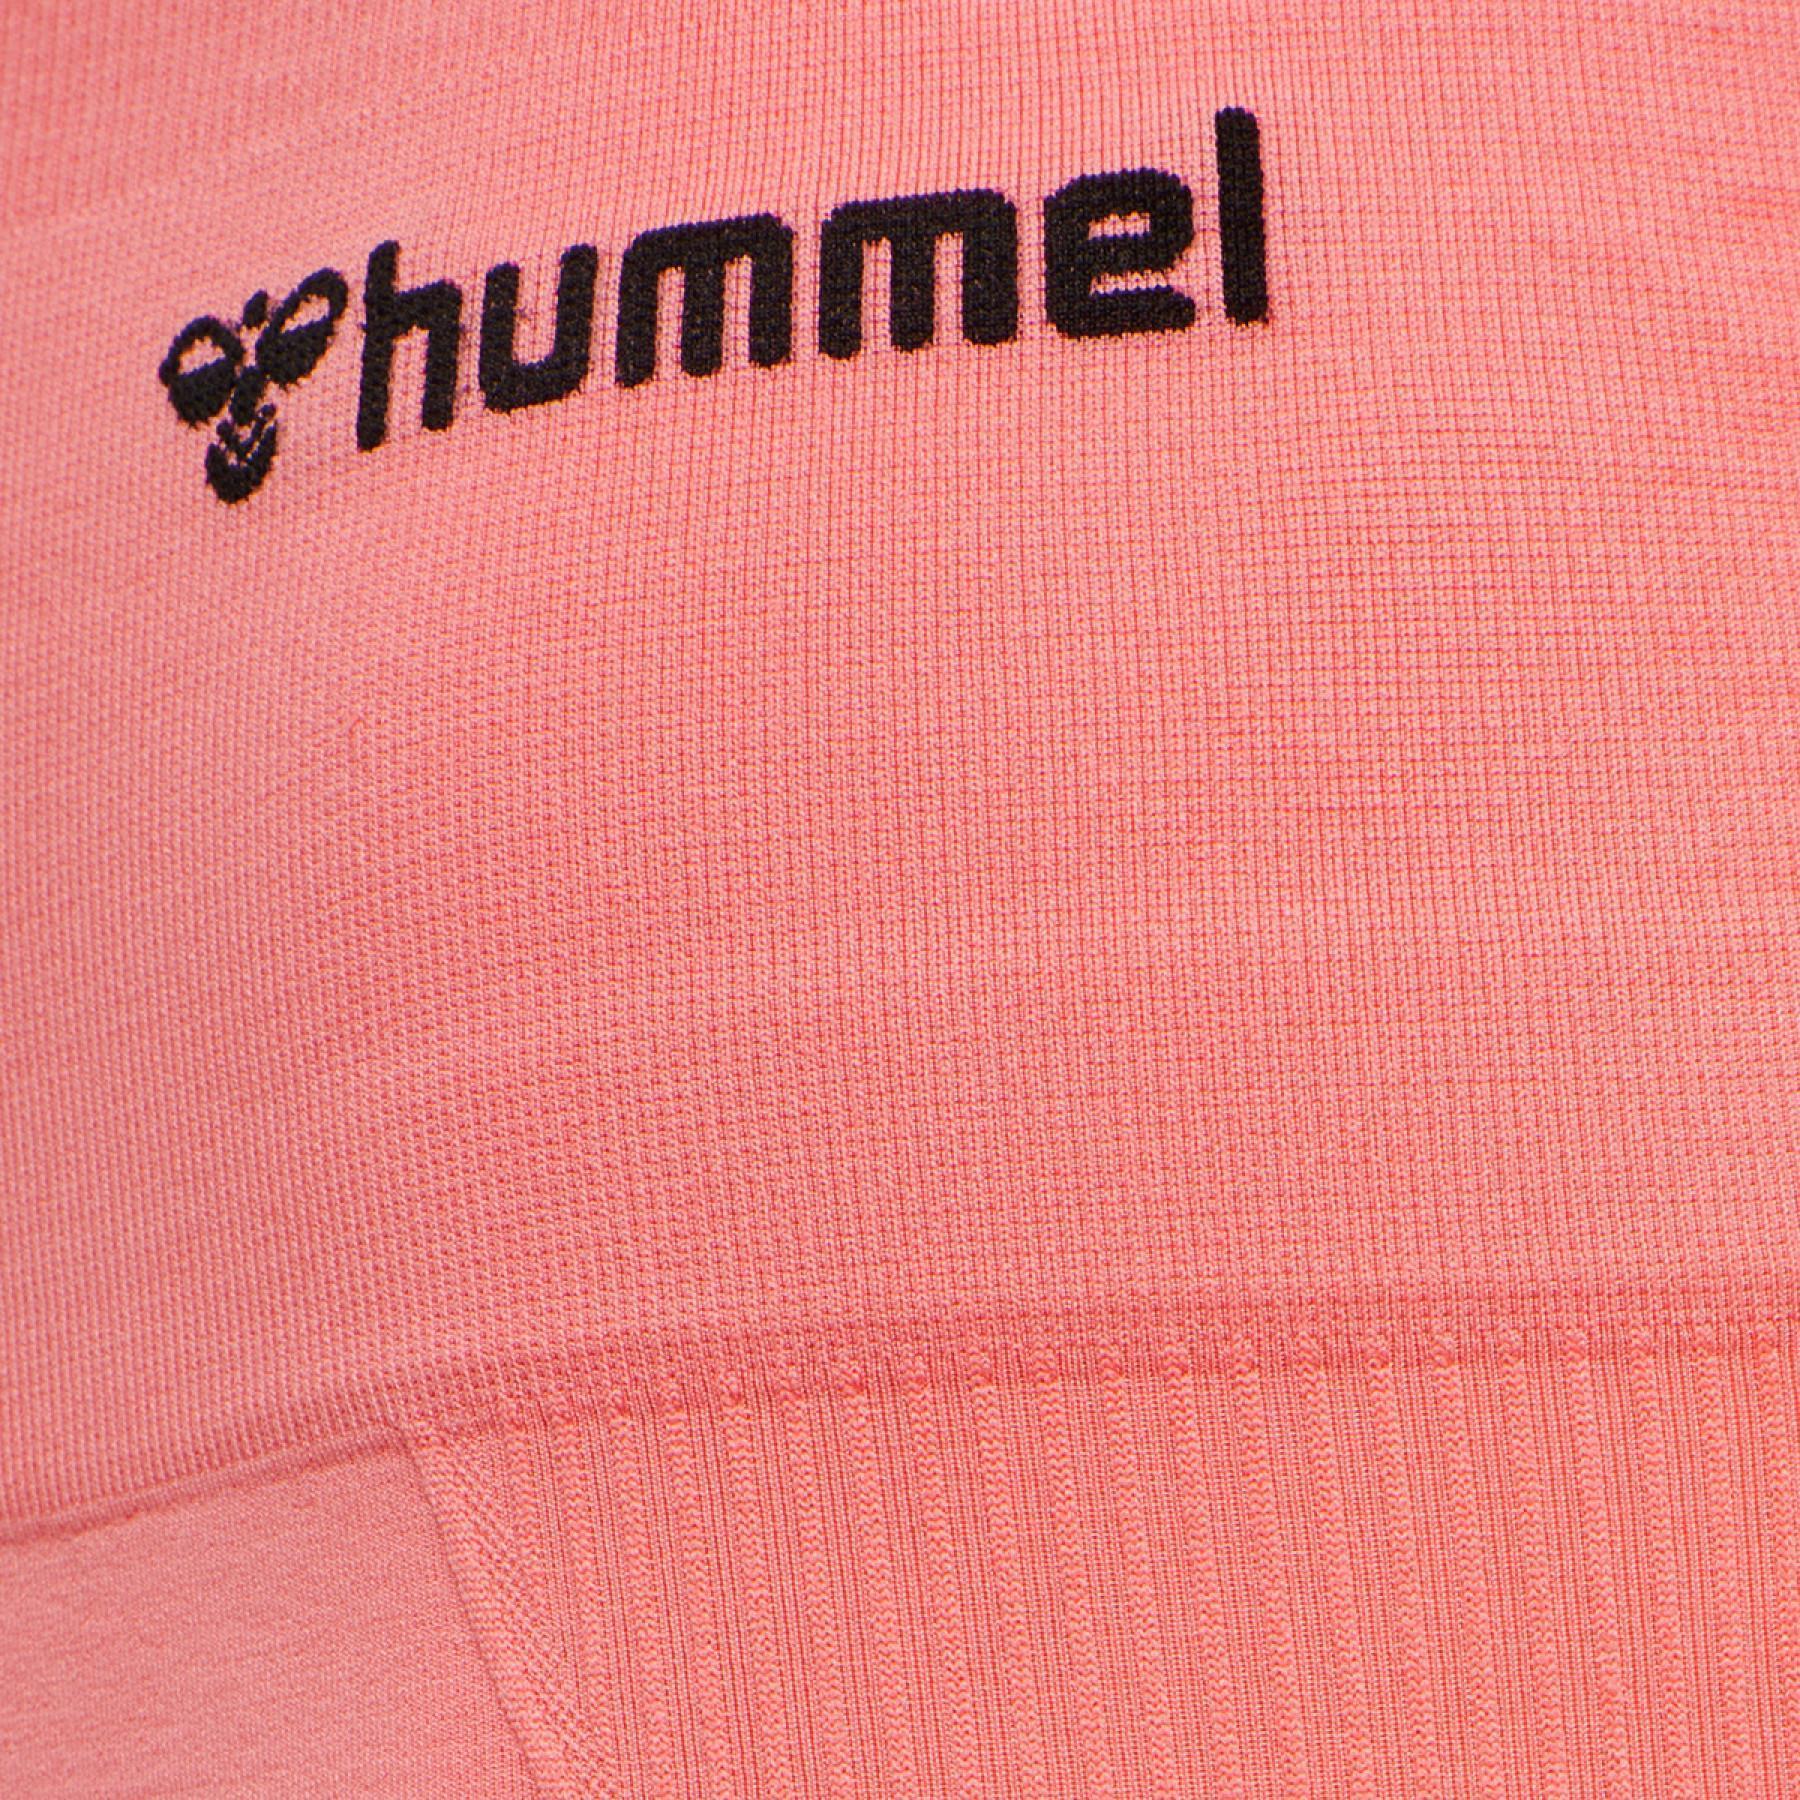 Dames shorts Hummel hmltif cyling